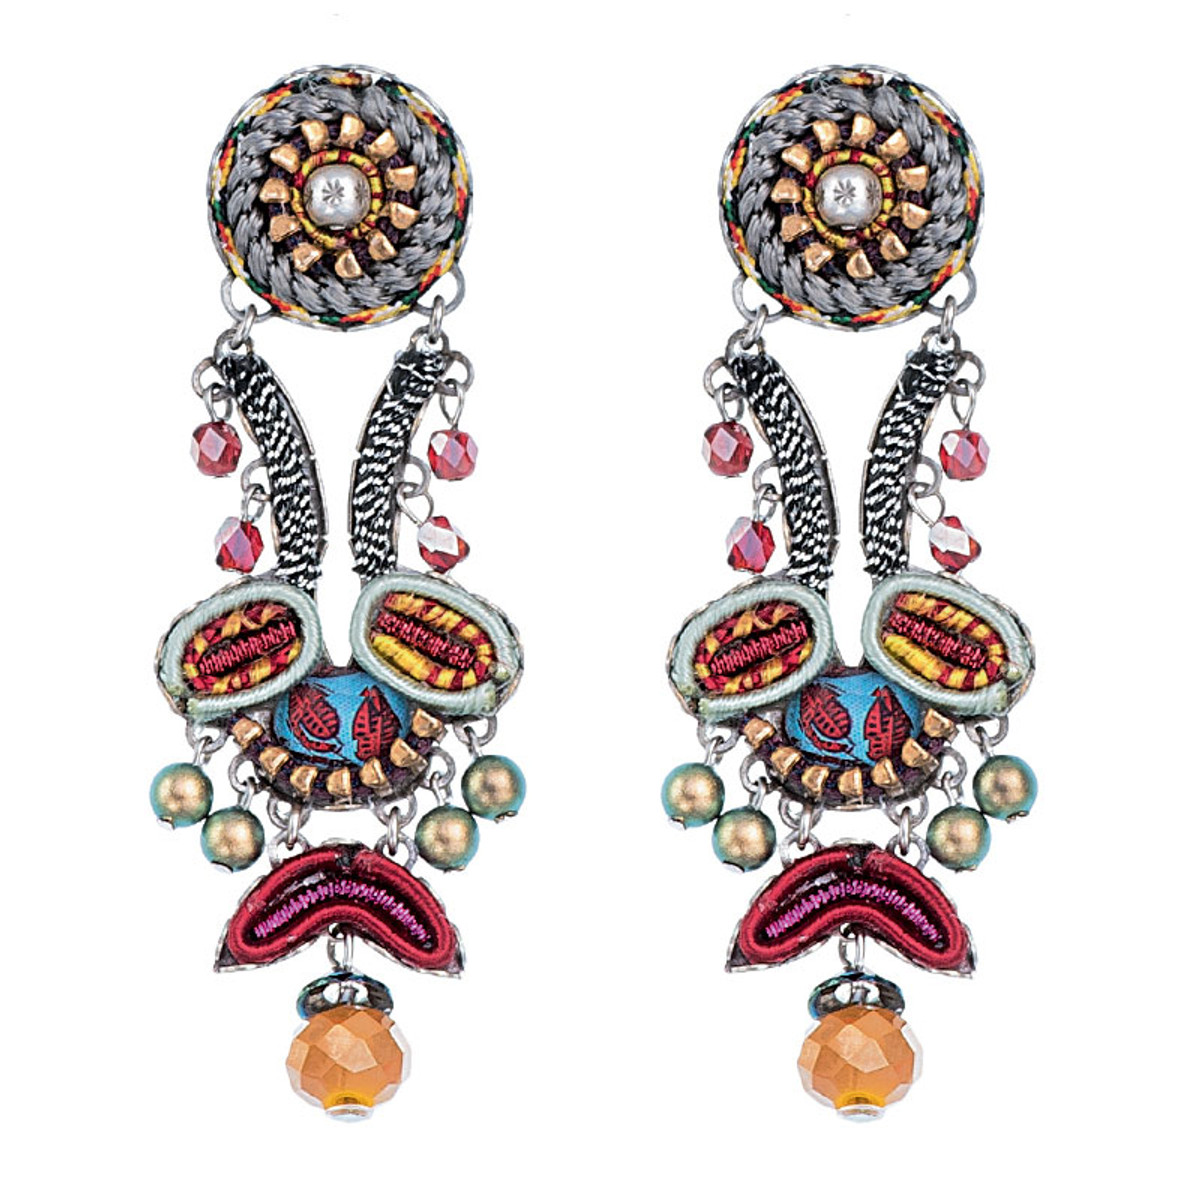 Sundazed earrings from Ayala Bar Jewelry